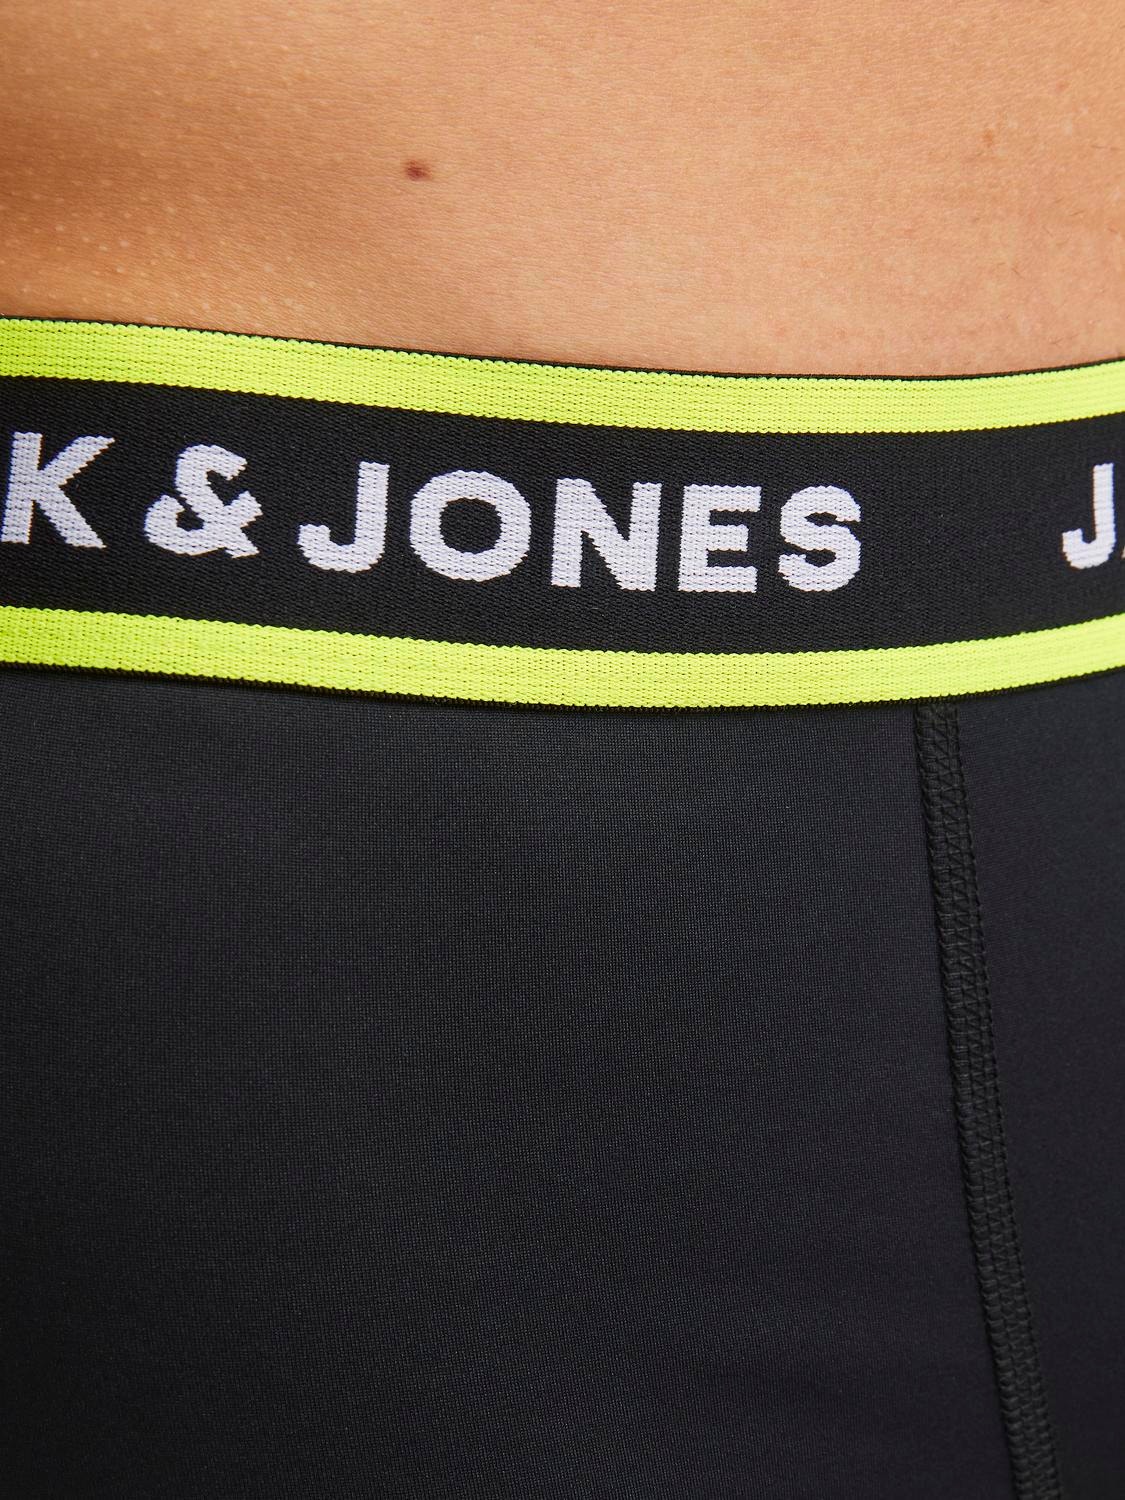 Jack & Jones 3-pak Trunks -Black - 12252655